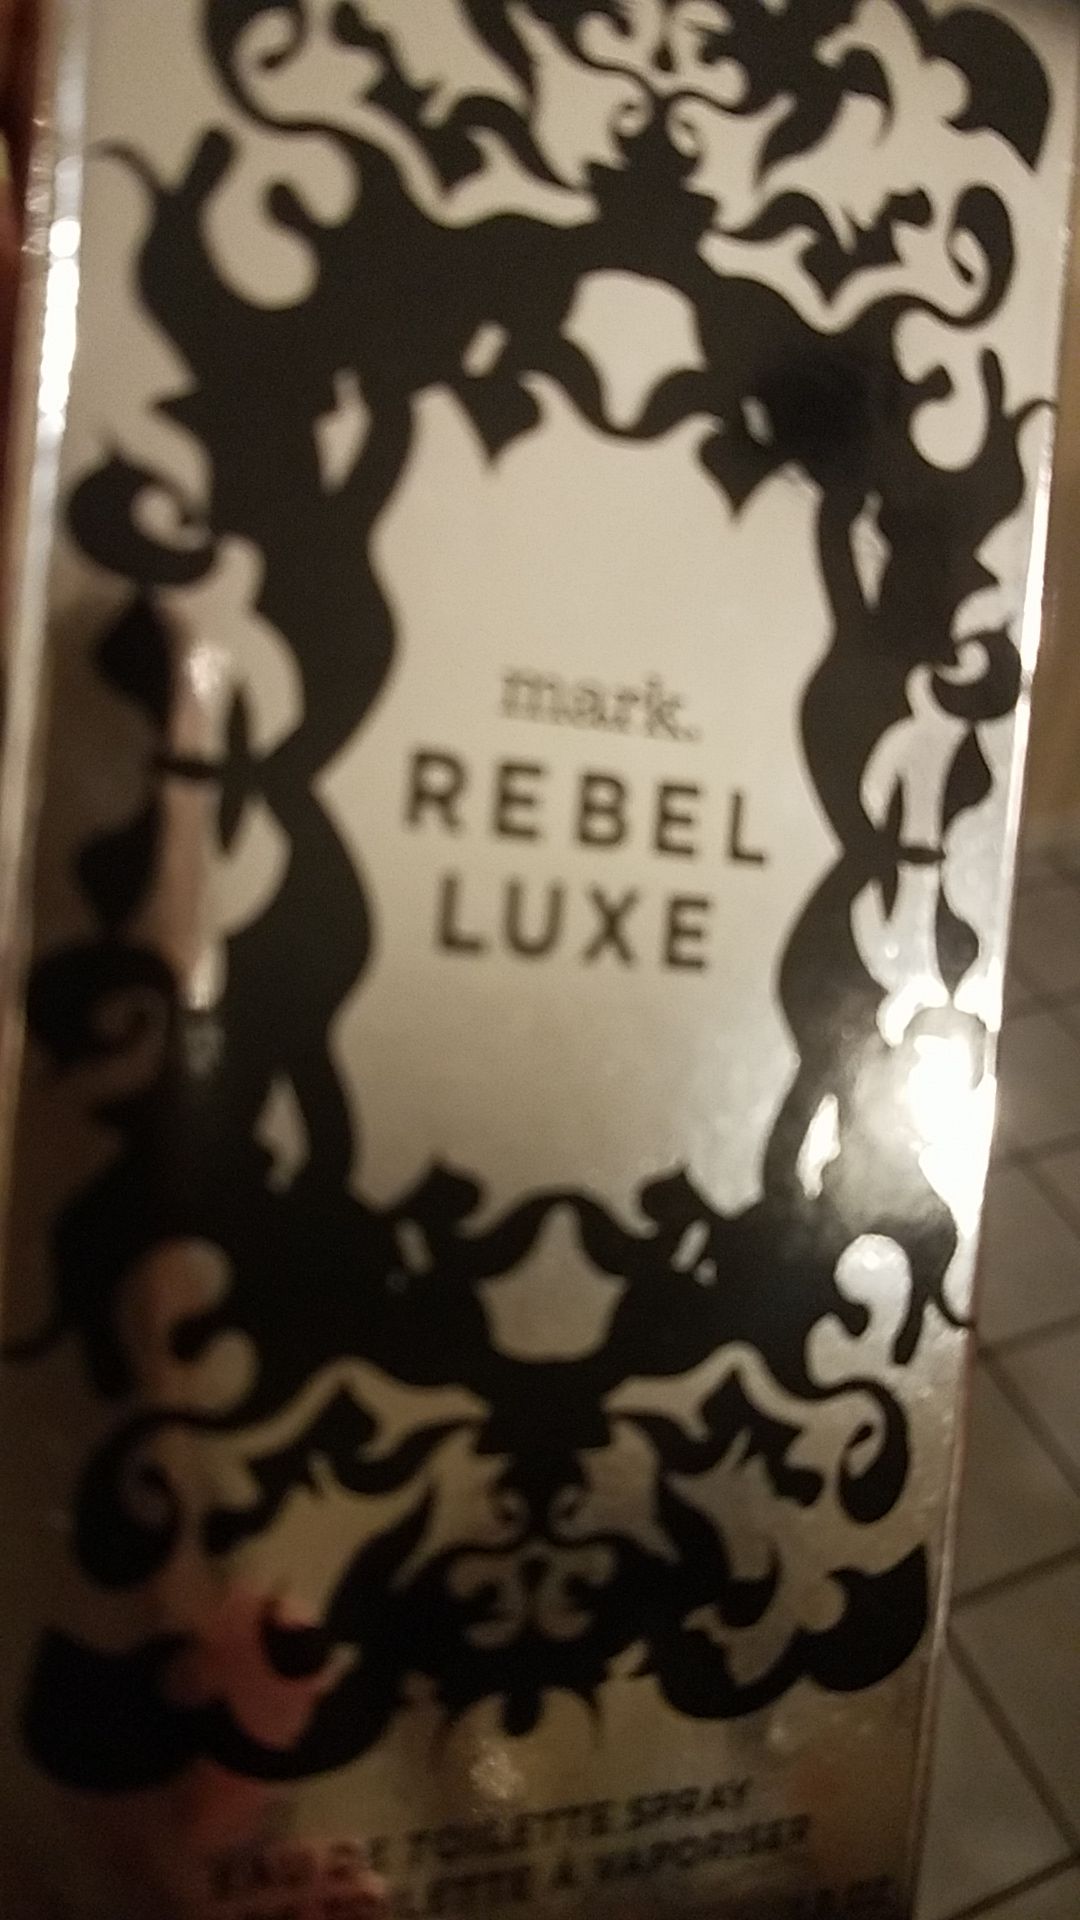 Marks Rebel Luxe perfume